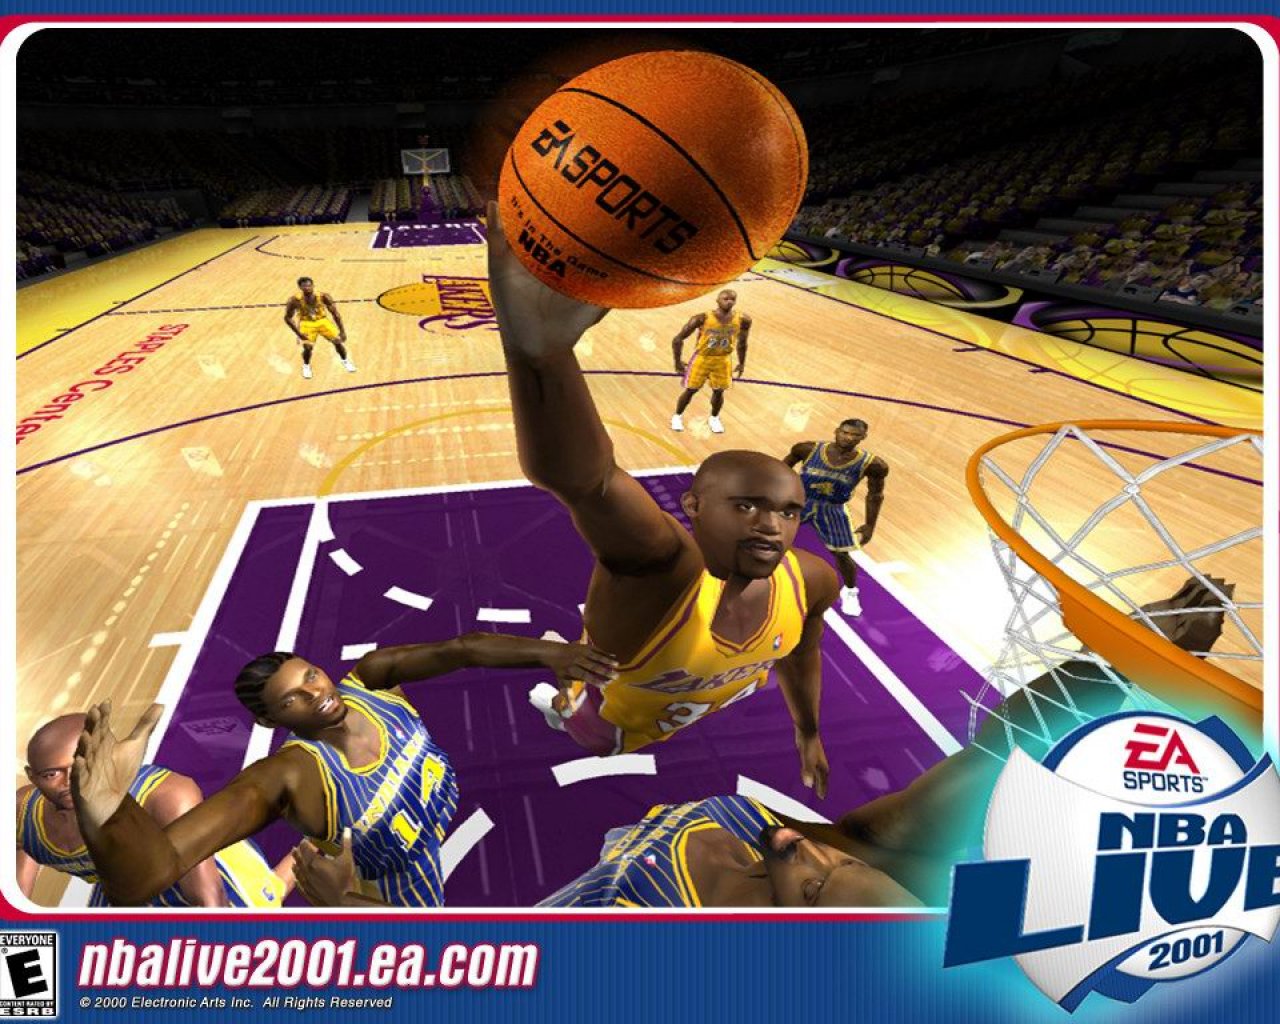 NBA Live Wallpapers - Download NBA Live Wallpapers